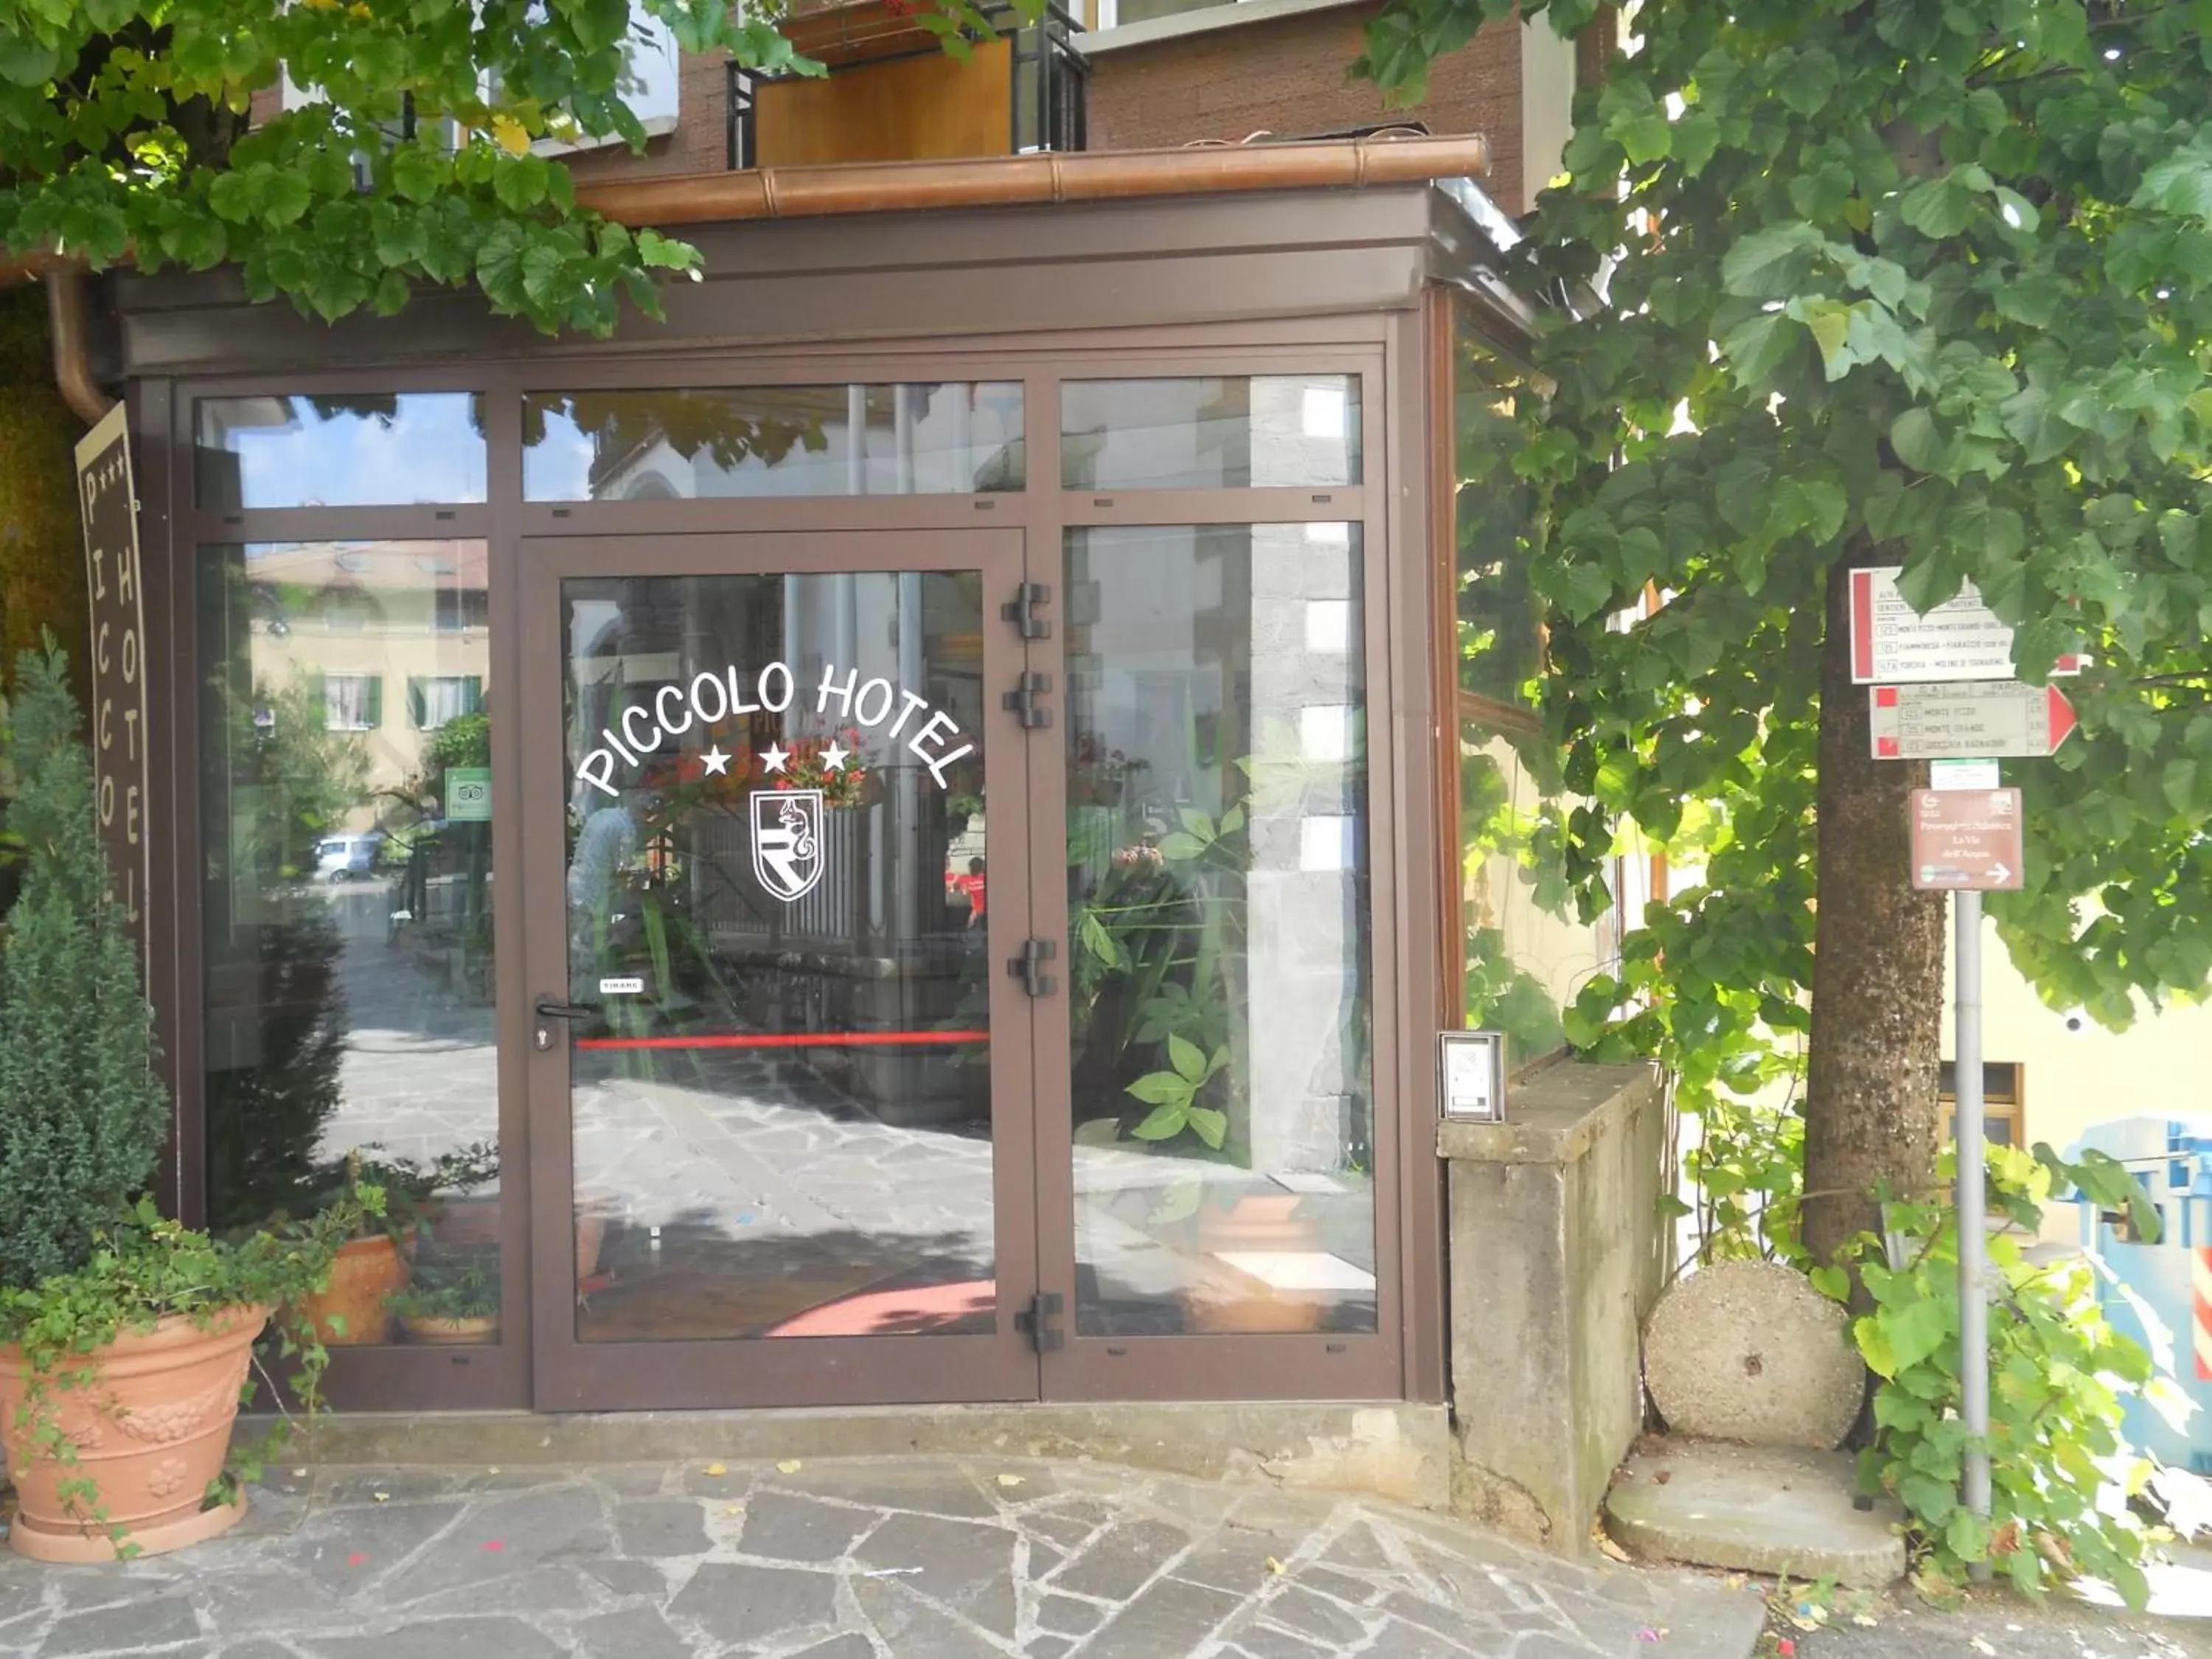 Facade/entrance in Piccolo Hotel